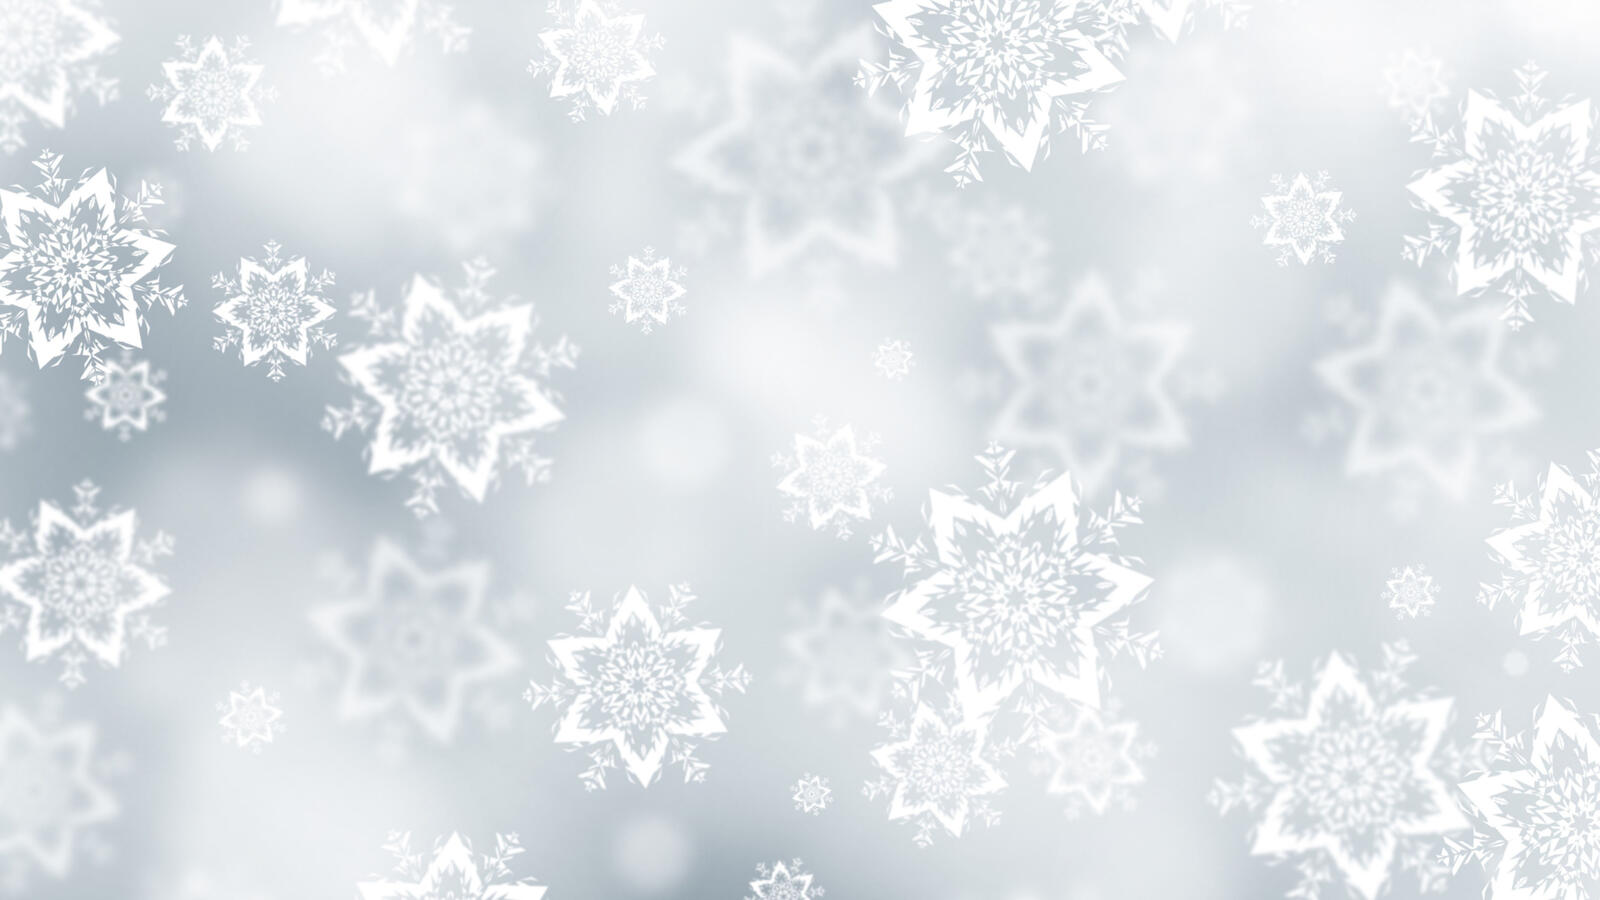 Бесплатное фото Белый фон со снежинками